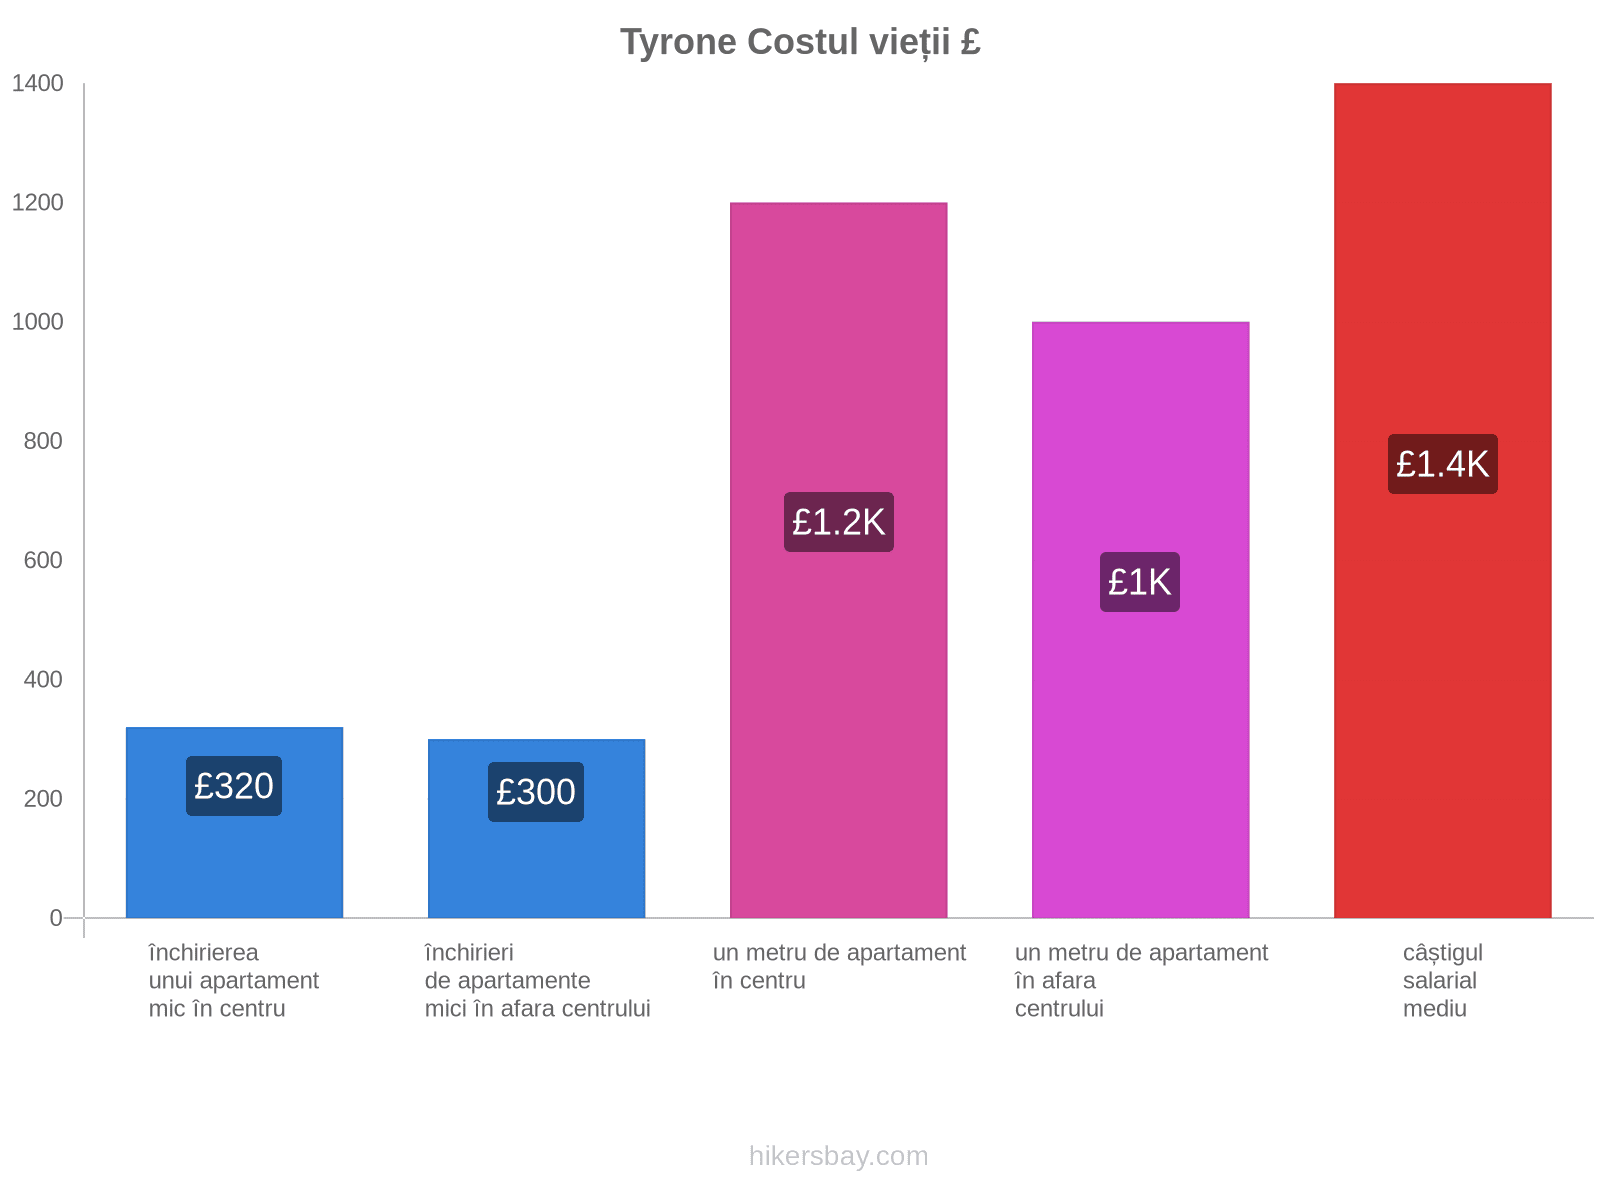 Tyrone costul vieții hikersbay.com